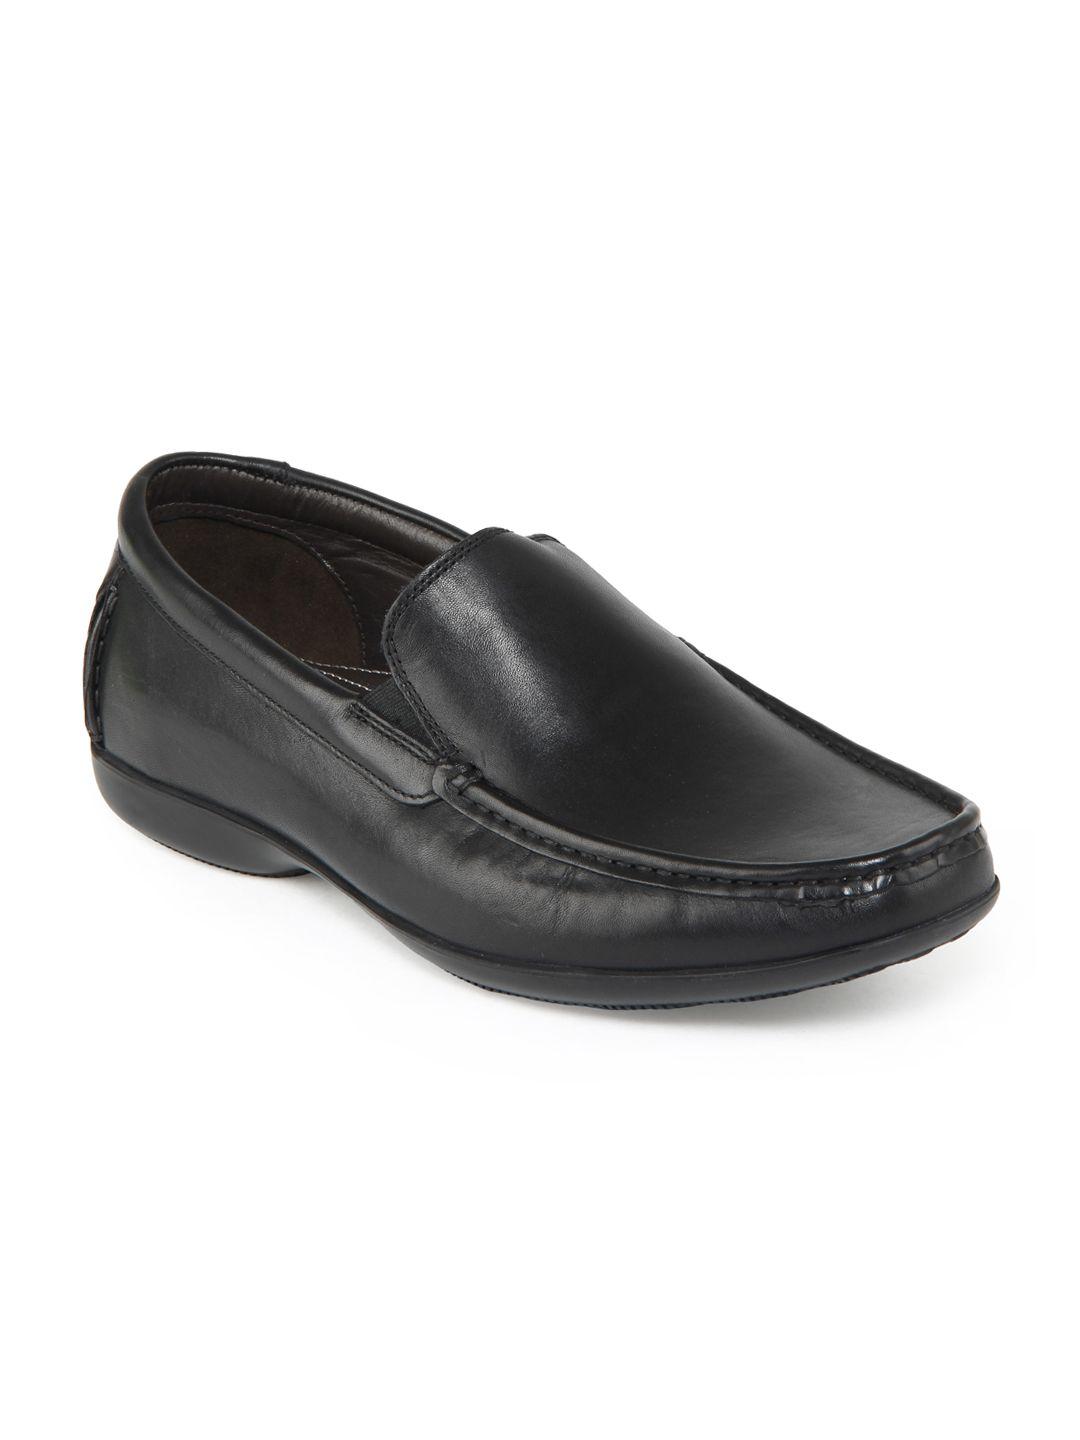 clarks men black semi-formal shoes